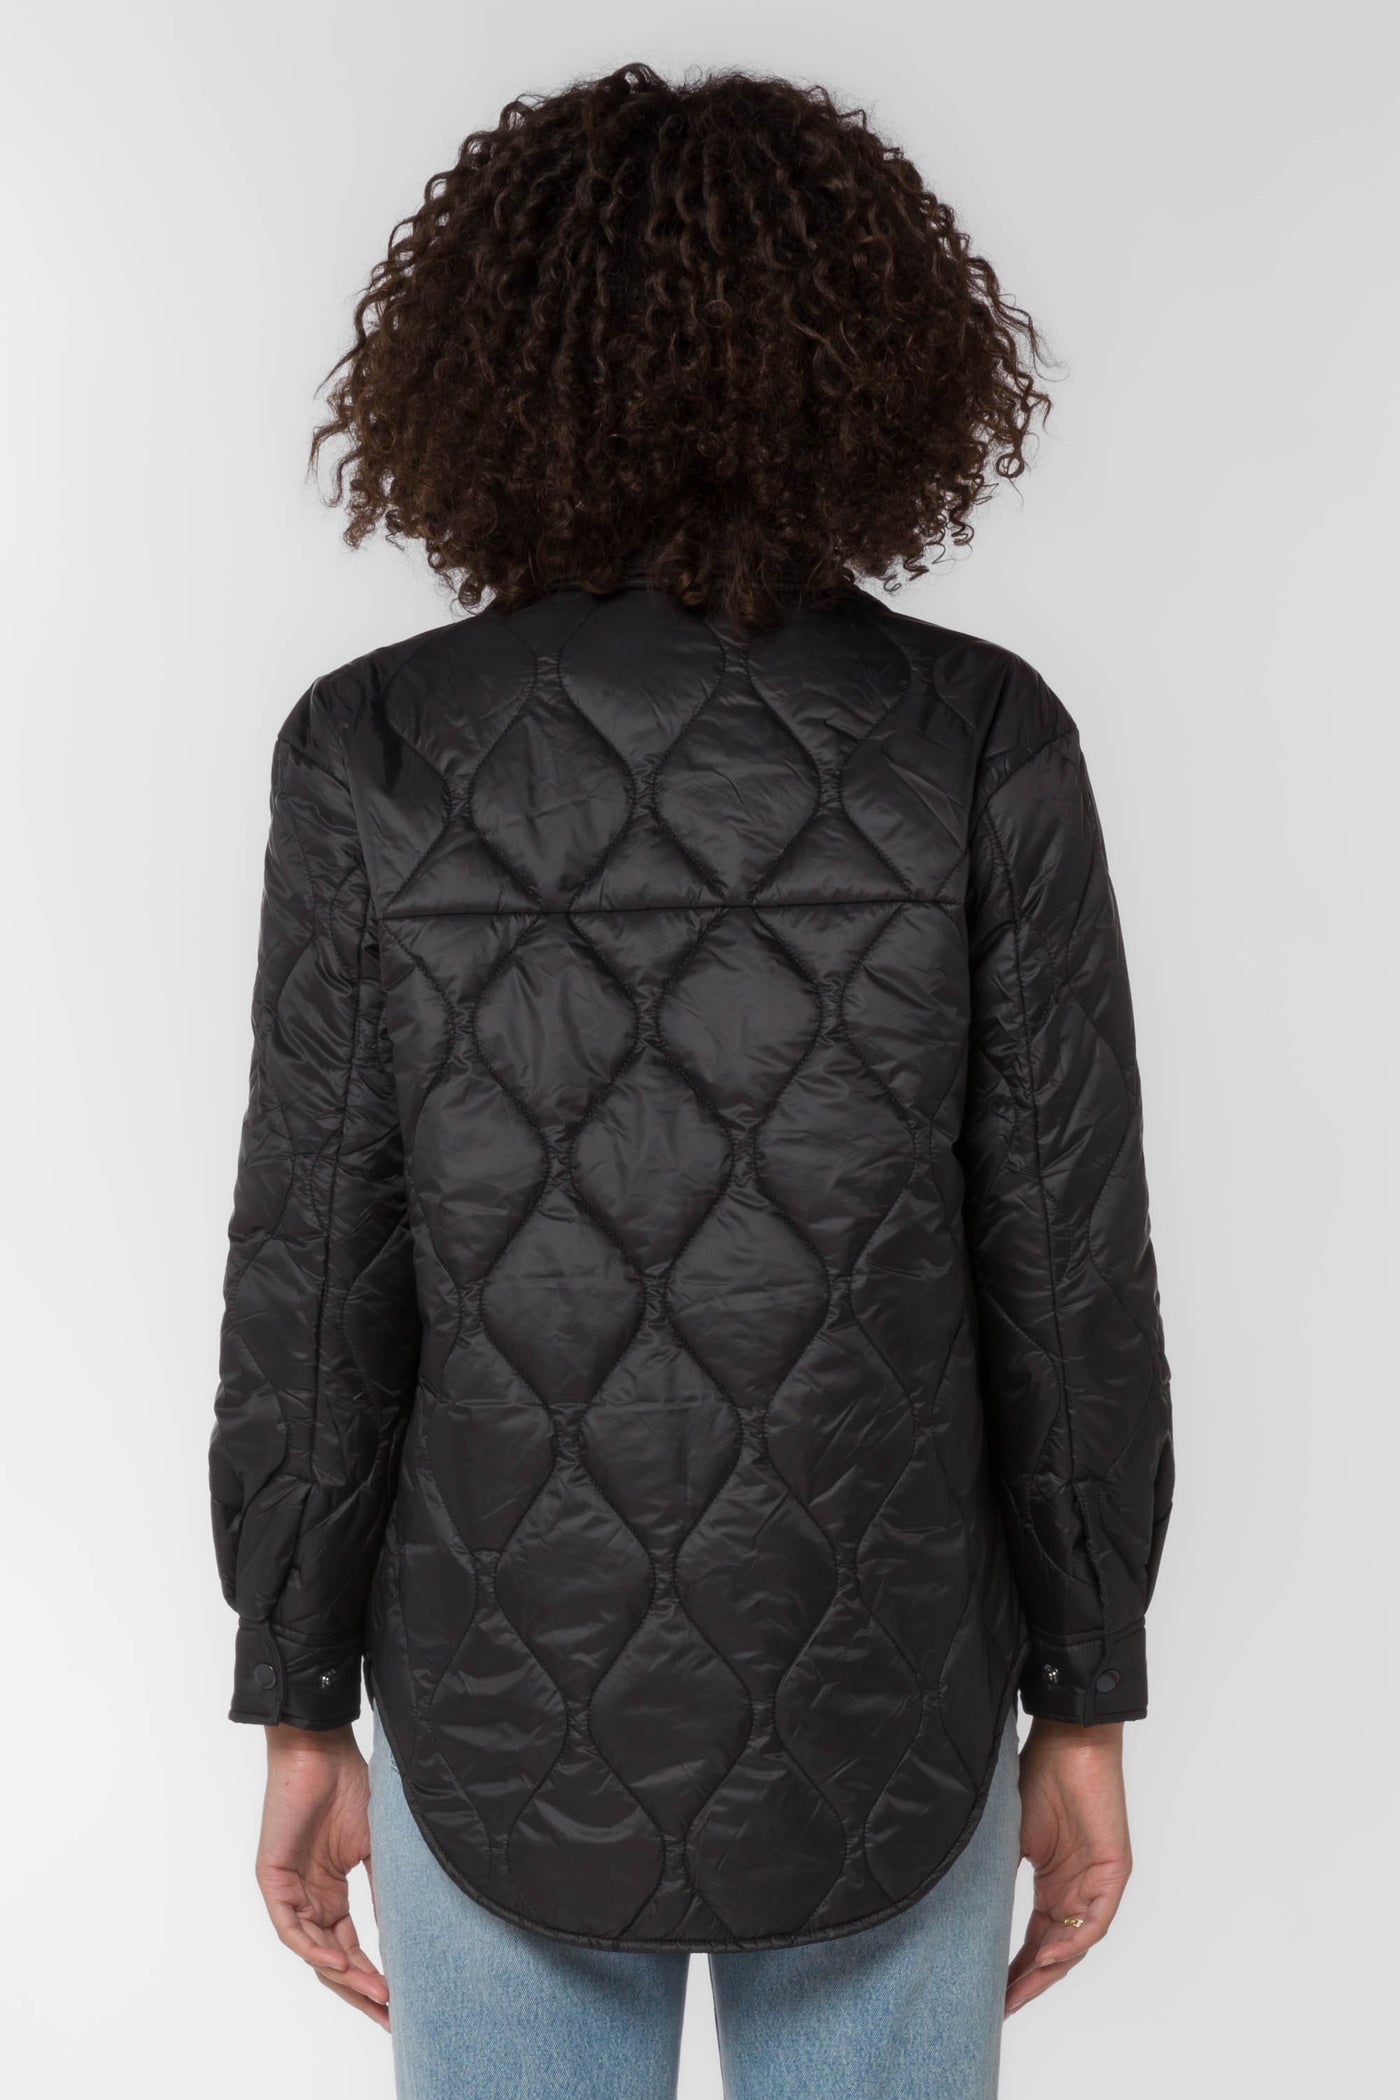 Eleanor Black Jacket - Jackets & Outerwear - Velvet Heart Clothing